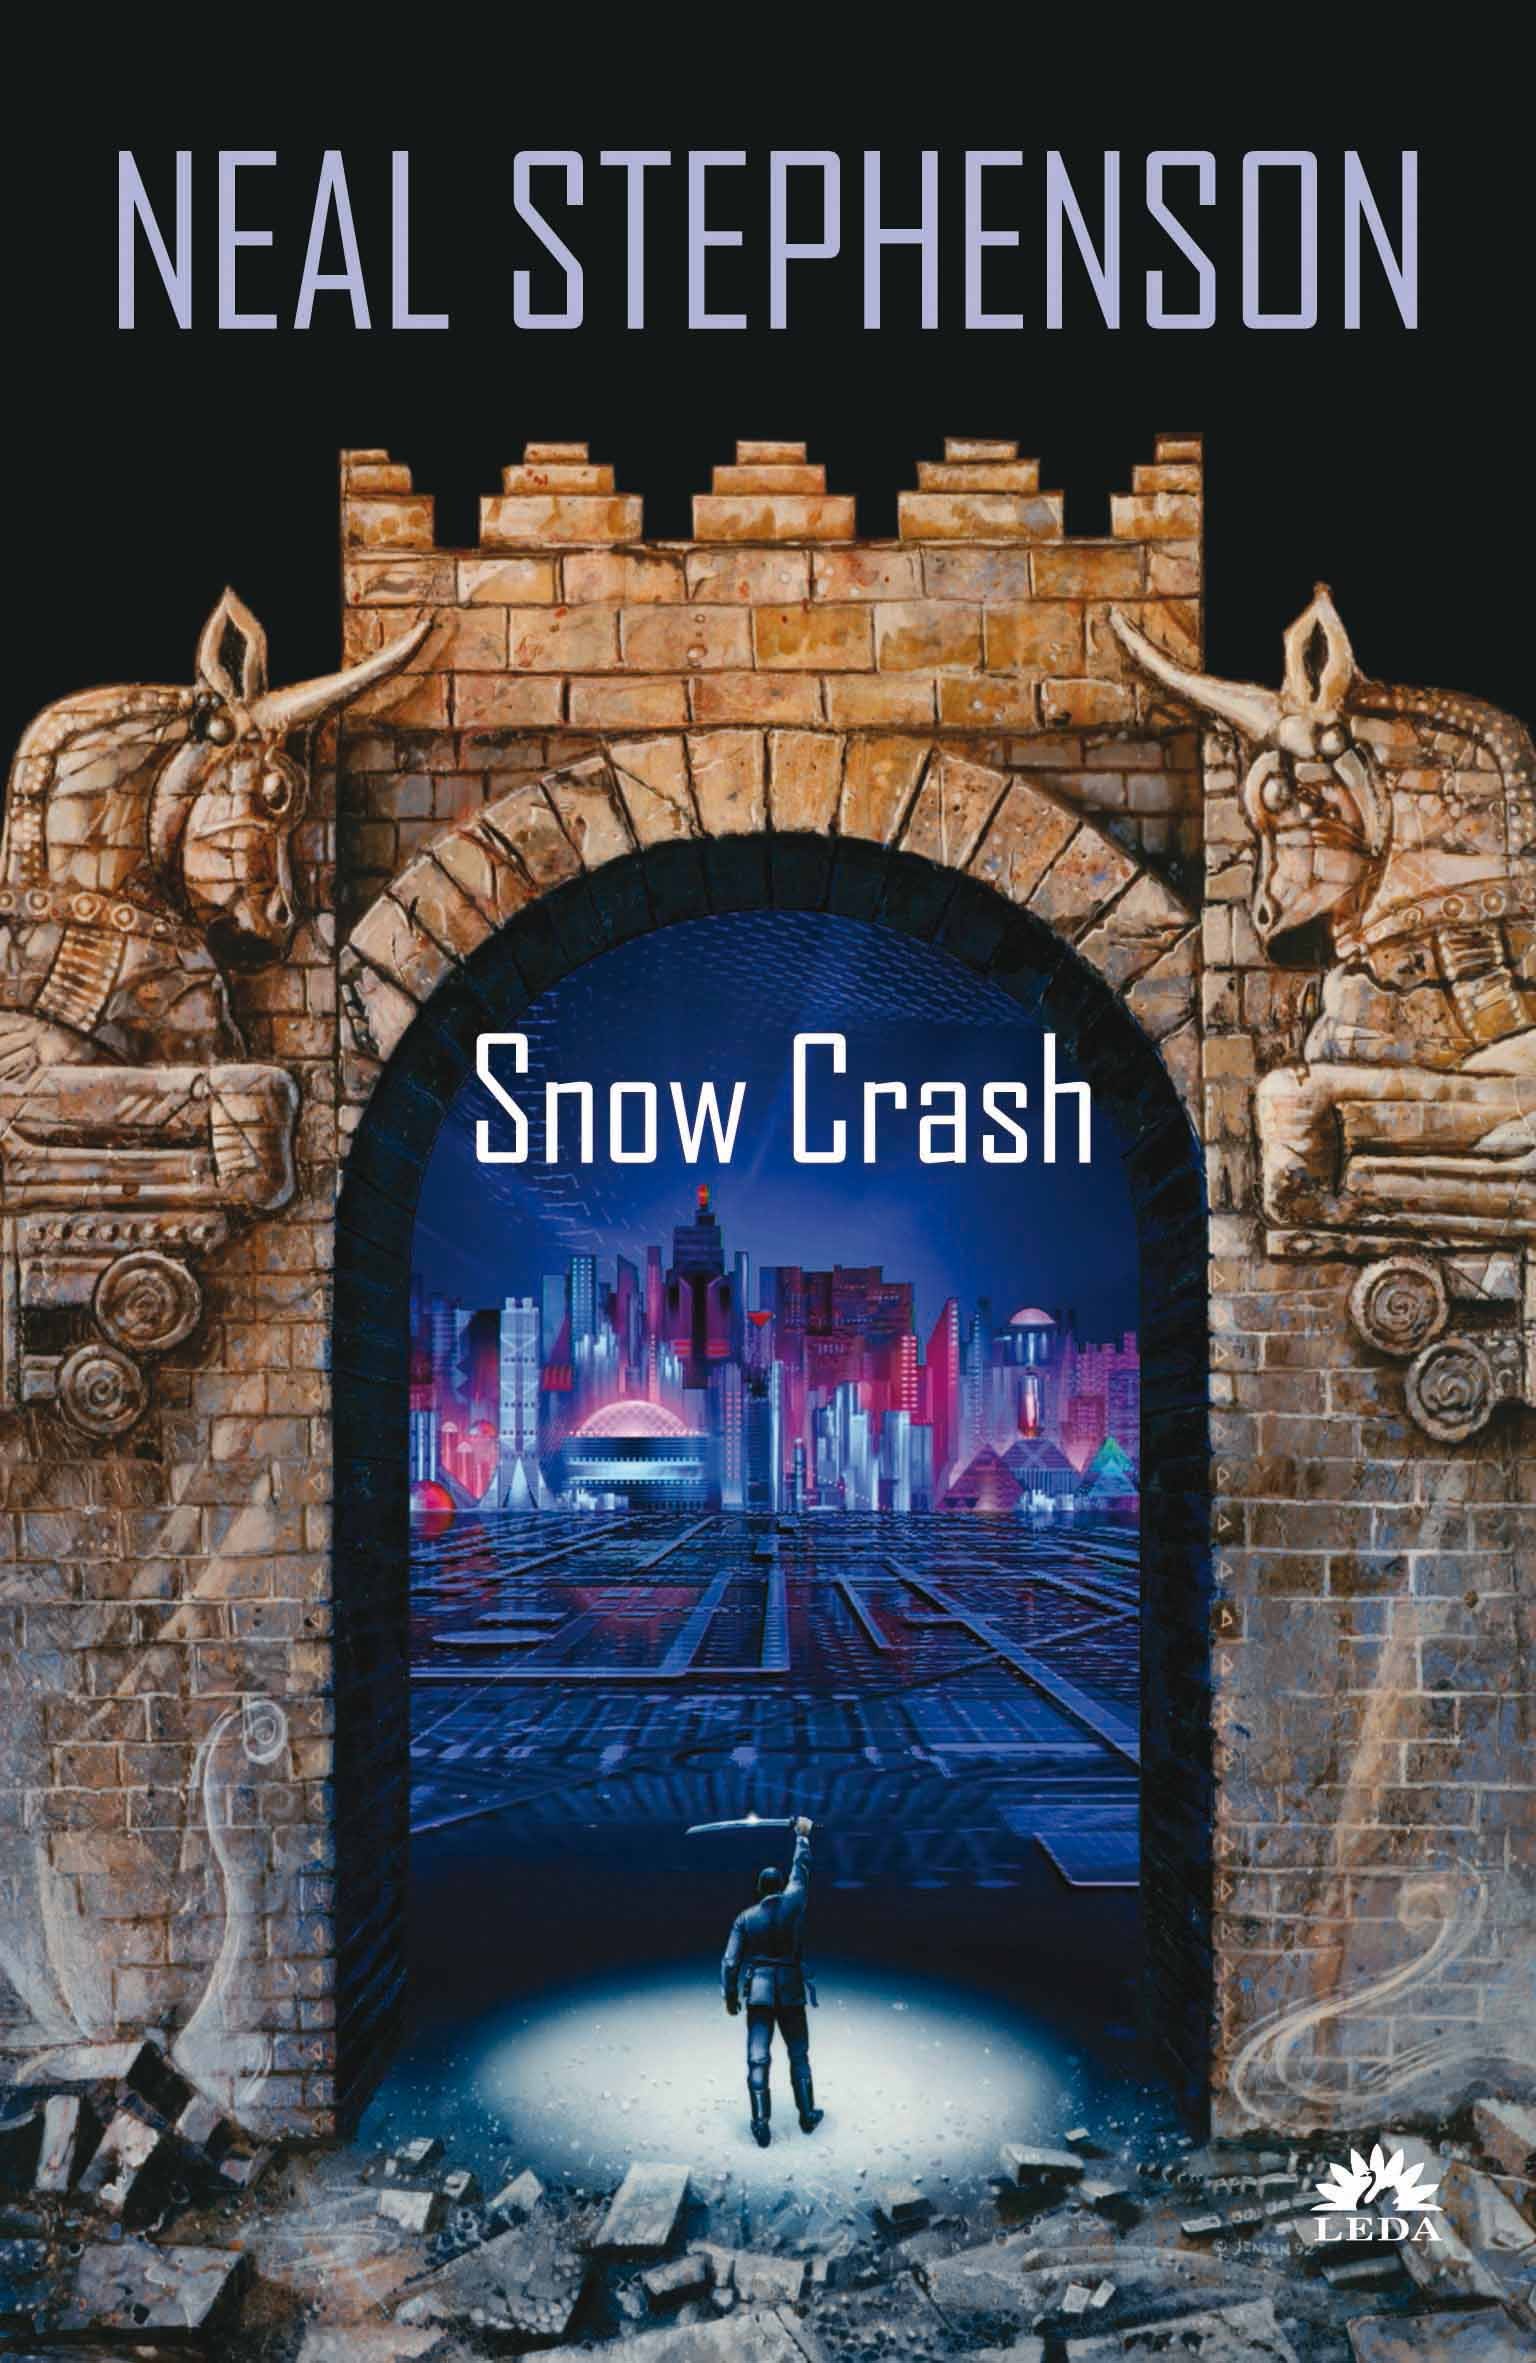 Hong Kong curator on how science-fiction novel Snow Crash gave him